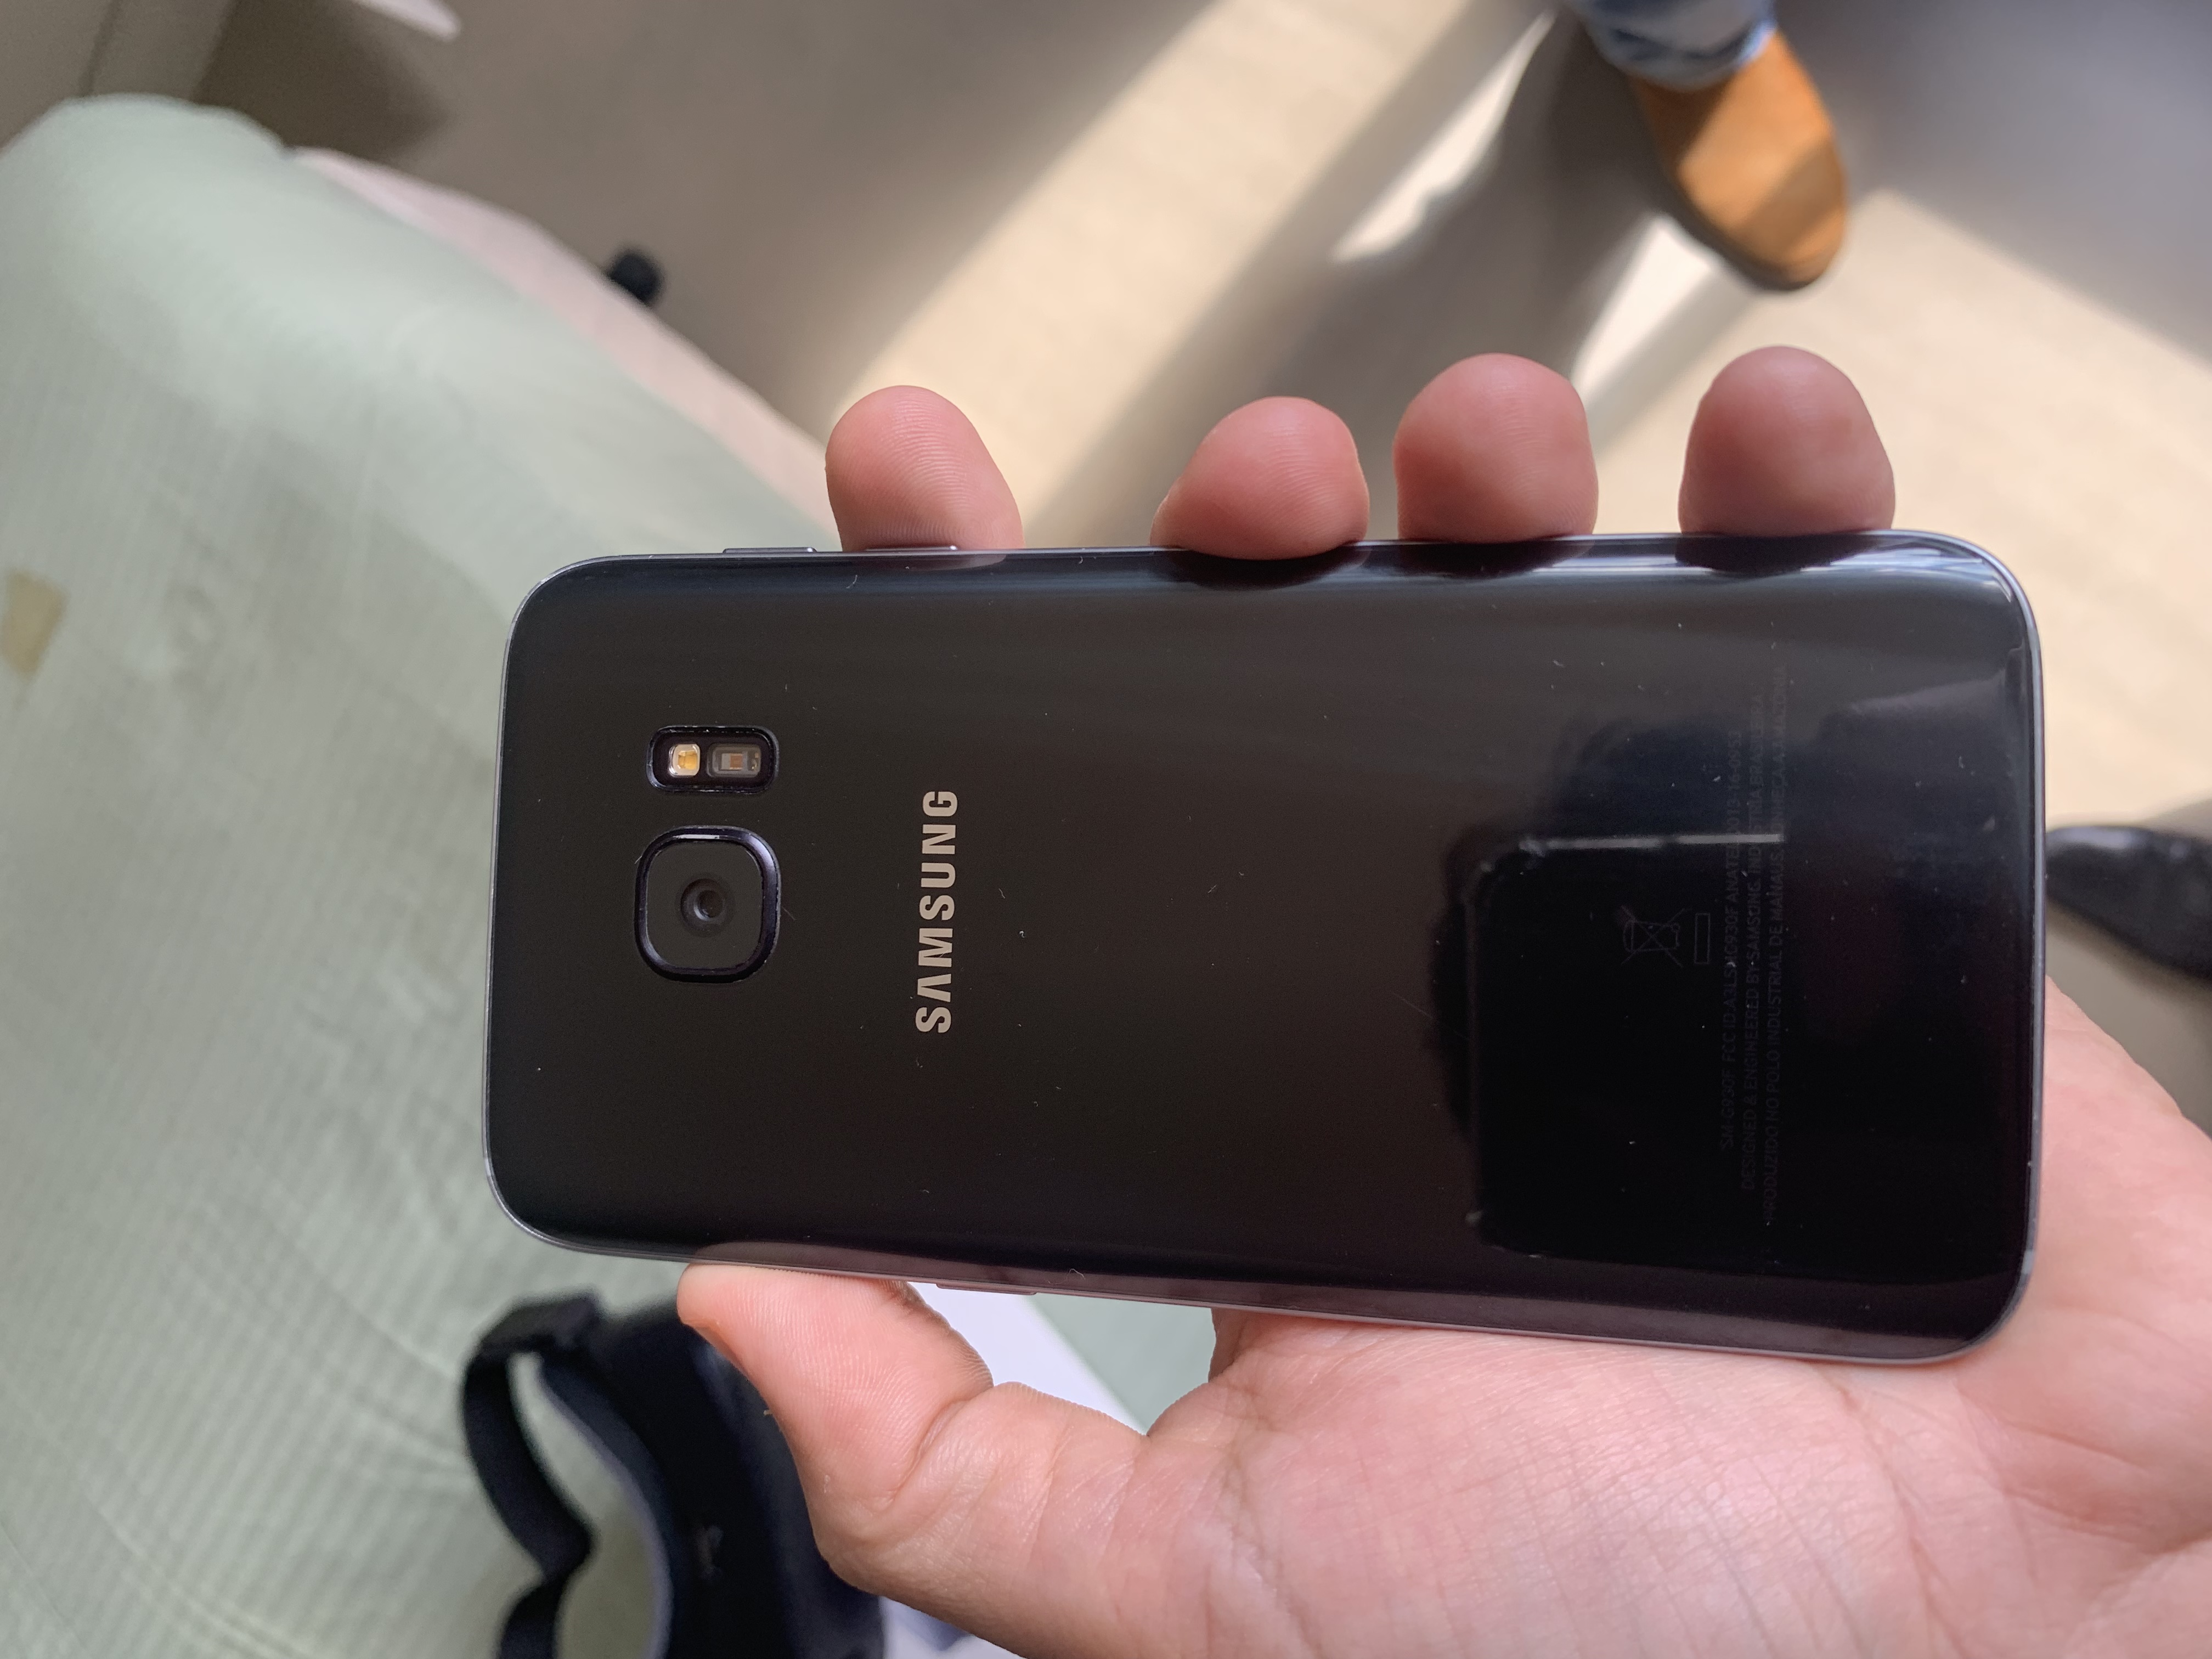 Galaxy S7 tela perfeita + Gear VR – Impecáveis, ambos com Nota, único dono